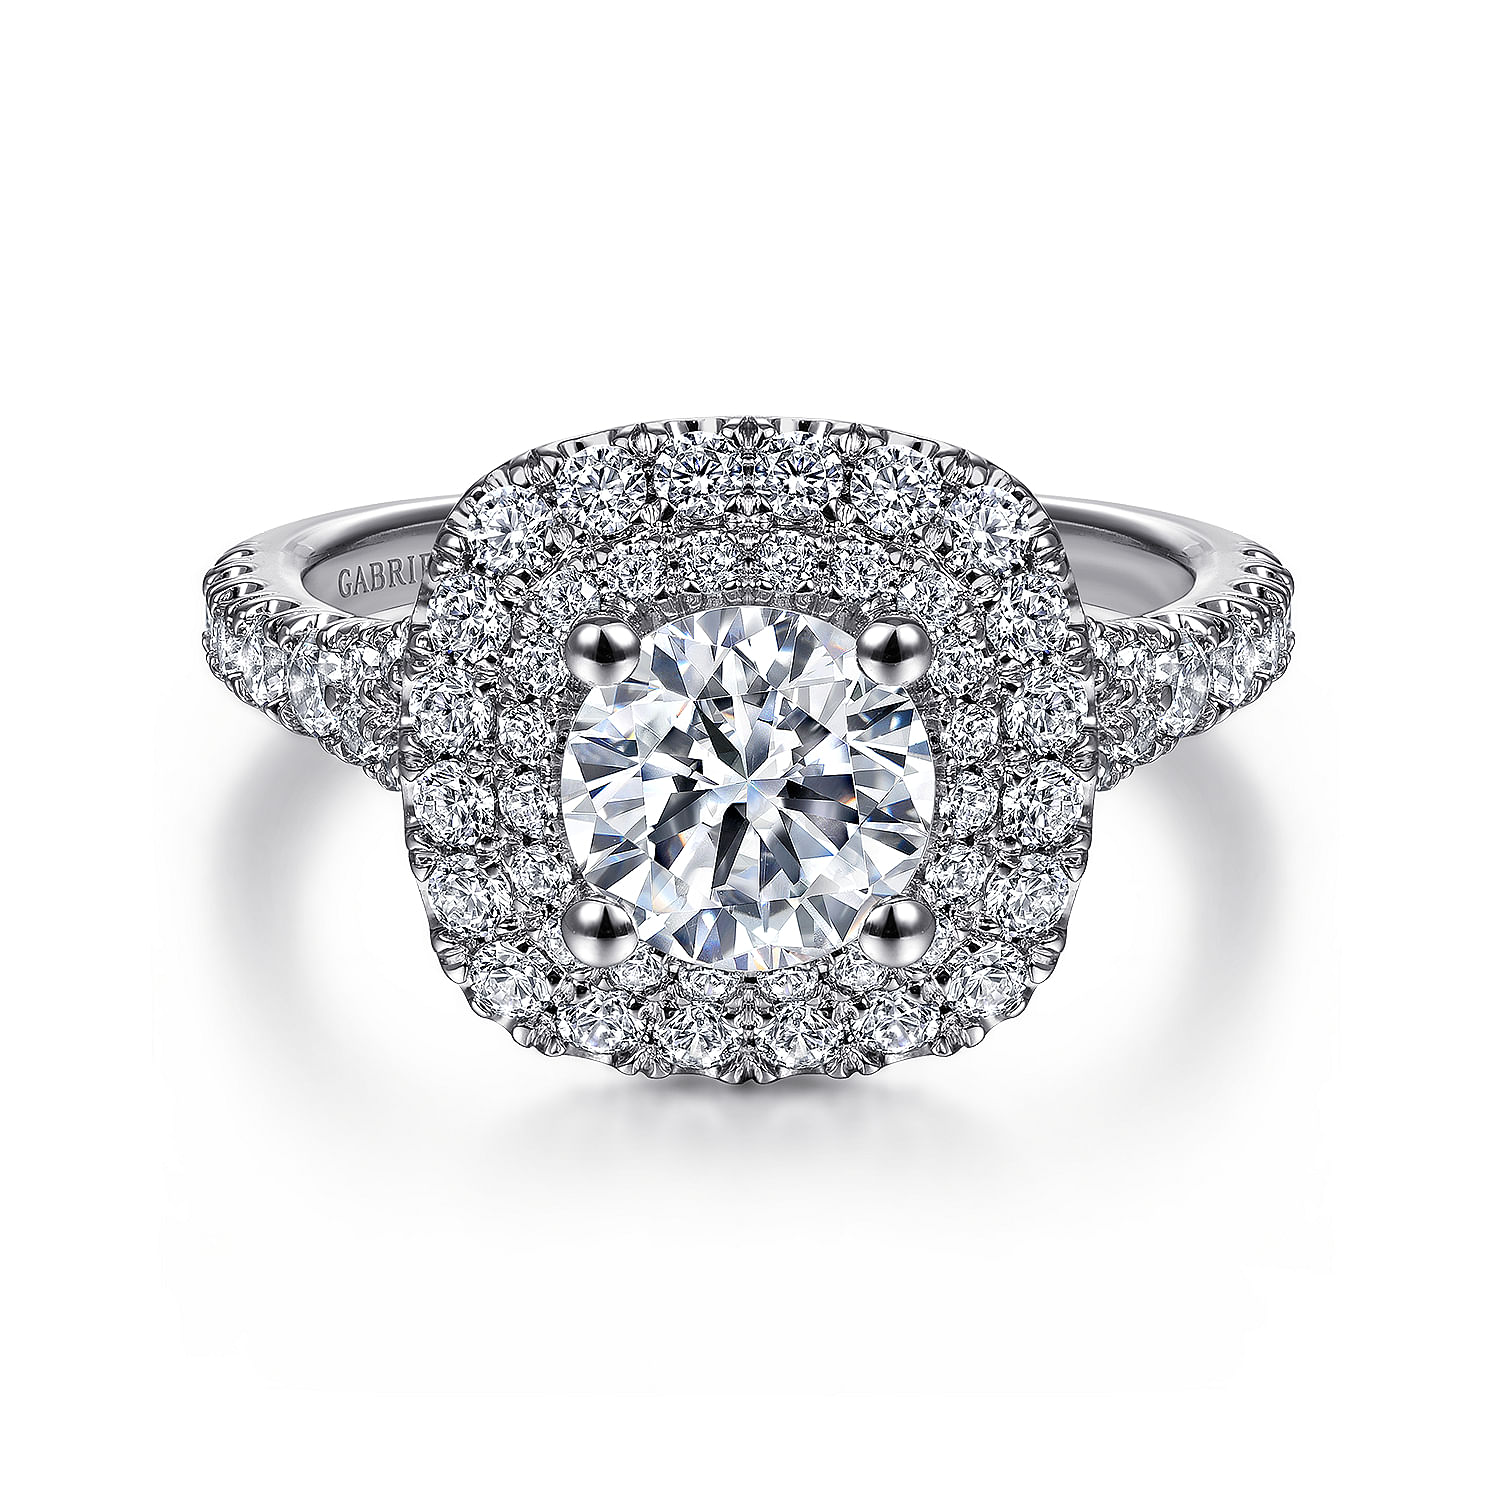 Sequoia - 14K White Gold Cushion Double Halo Round Diamond Engagement Ring